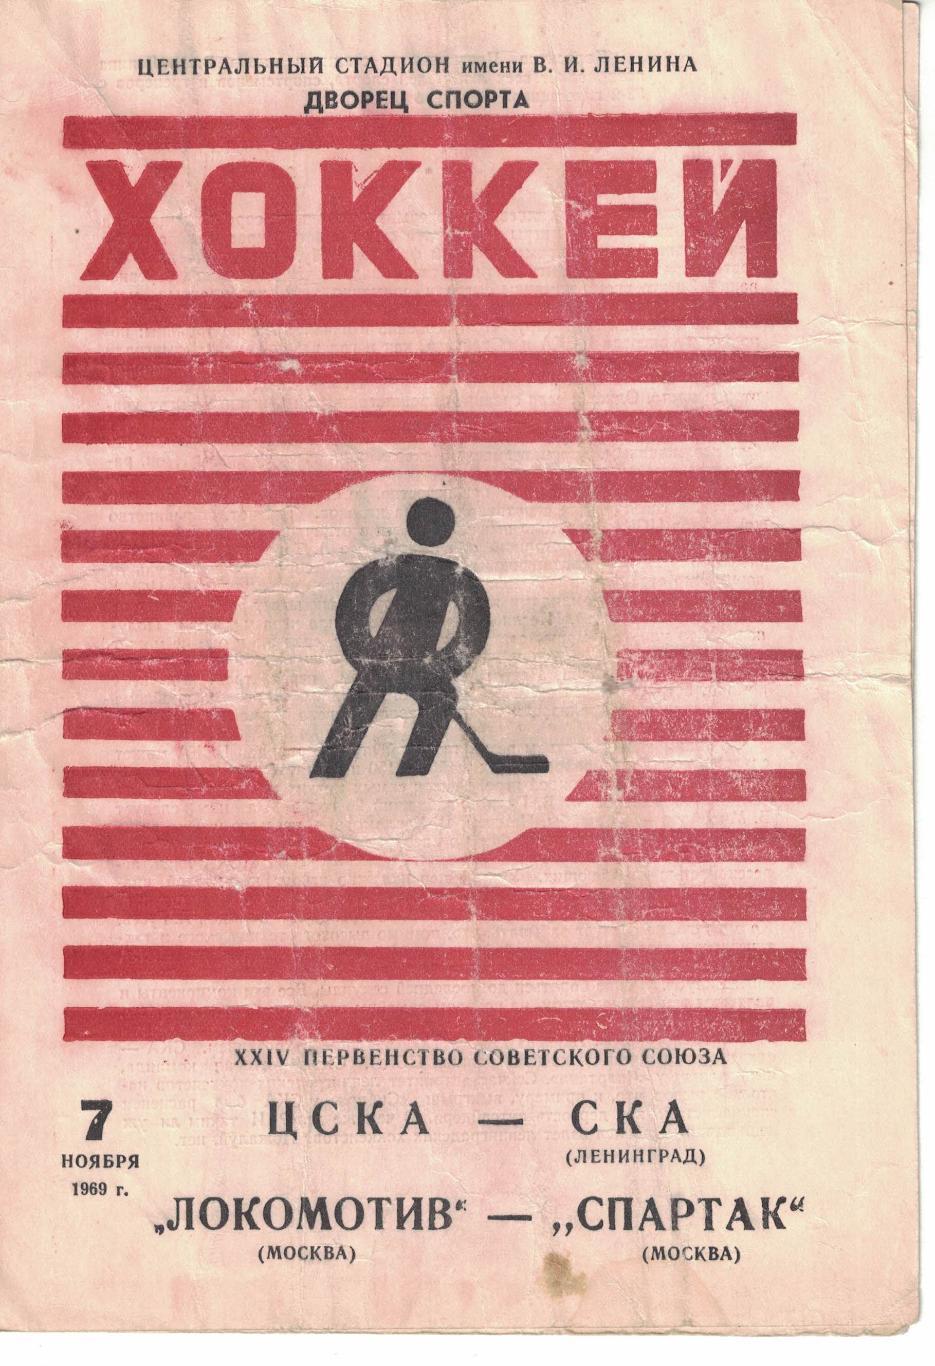 ЦСКА - СКА Ленинград, Локомотив Москва - Спартак Москва 07.11.1969